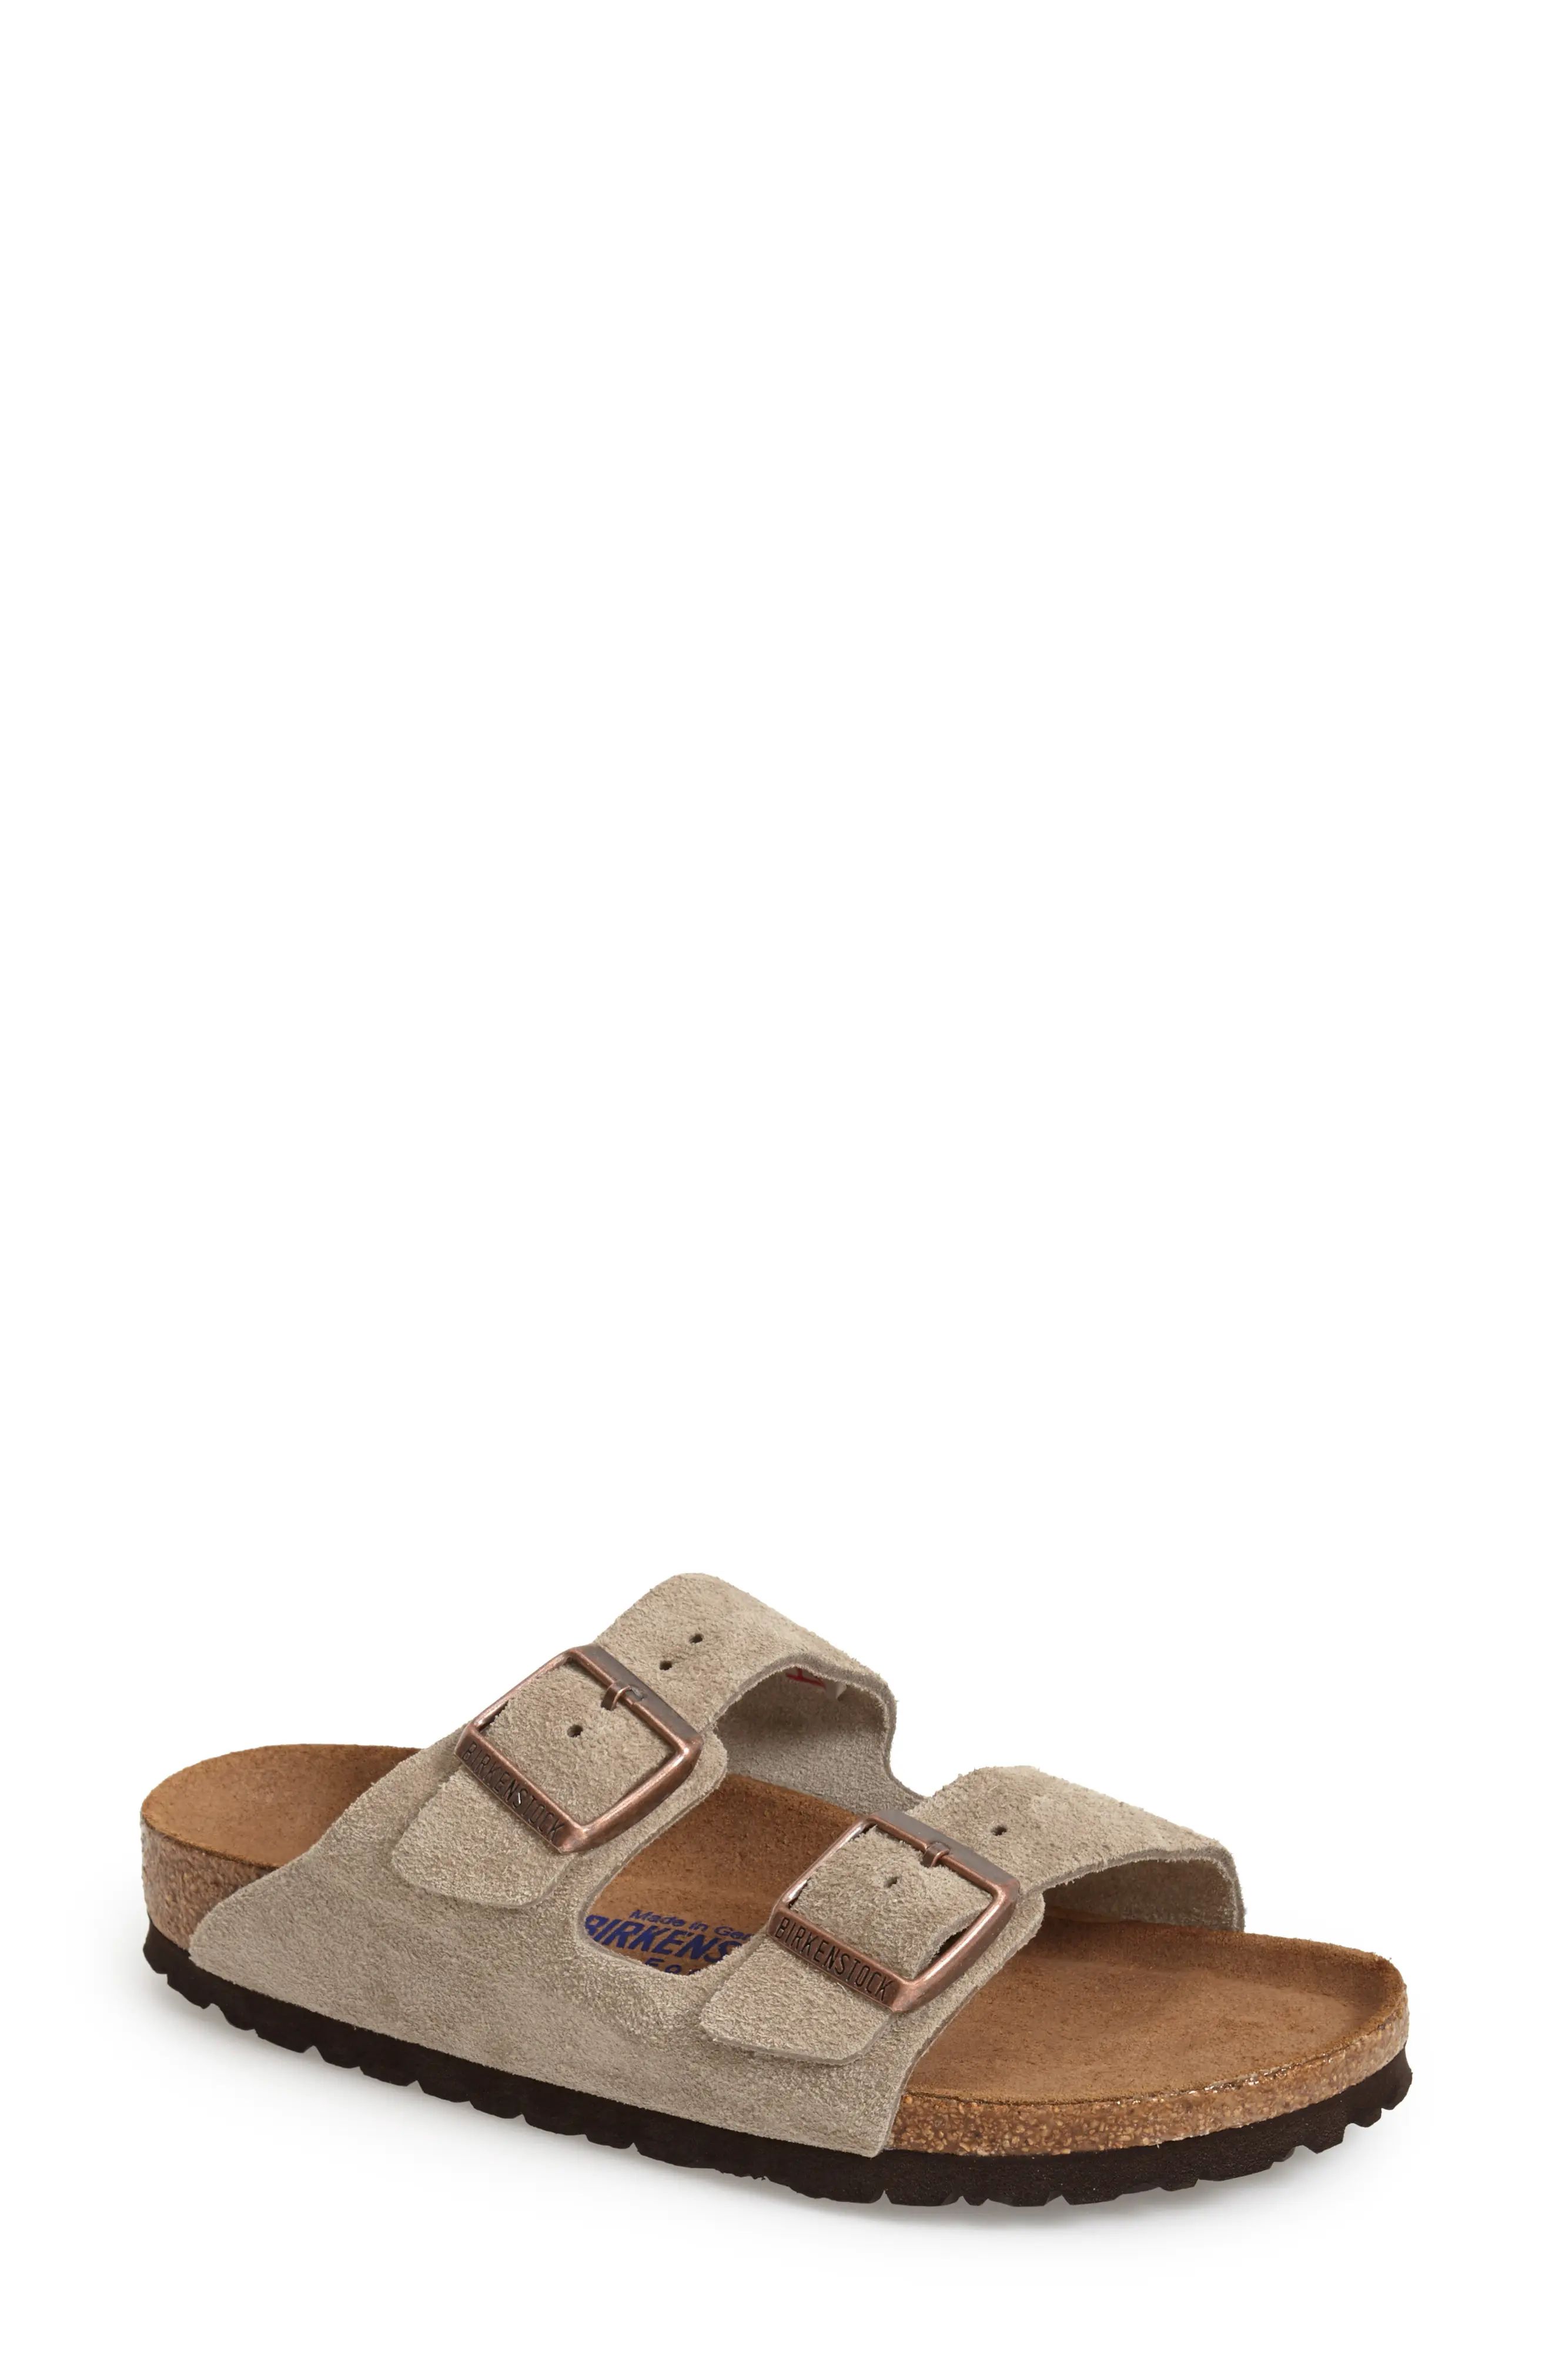 Women's Birkenstock 'Arizona' Soft Footbed Suede Sandal, Size 4-4.5US / 35EU B - Beige | Nordstrom